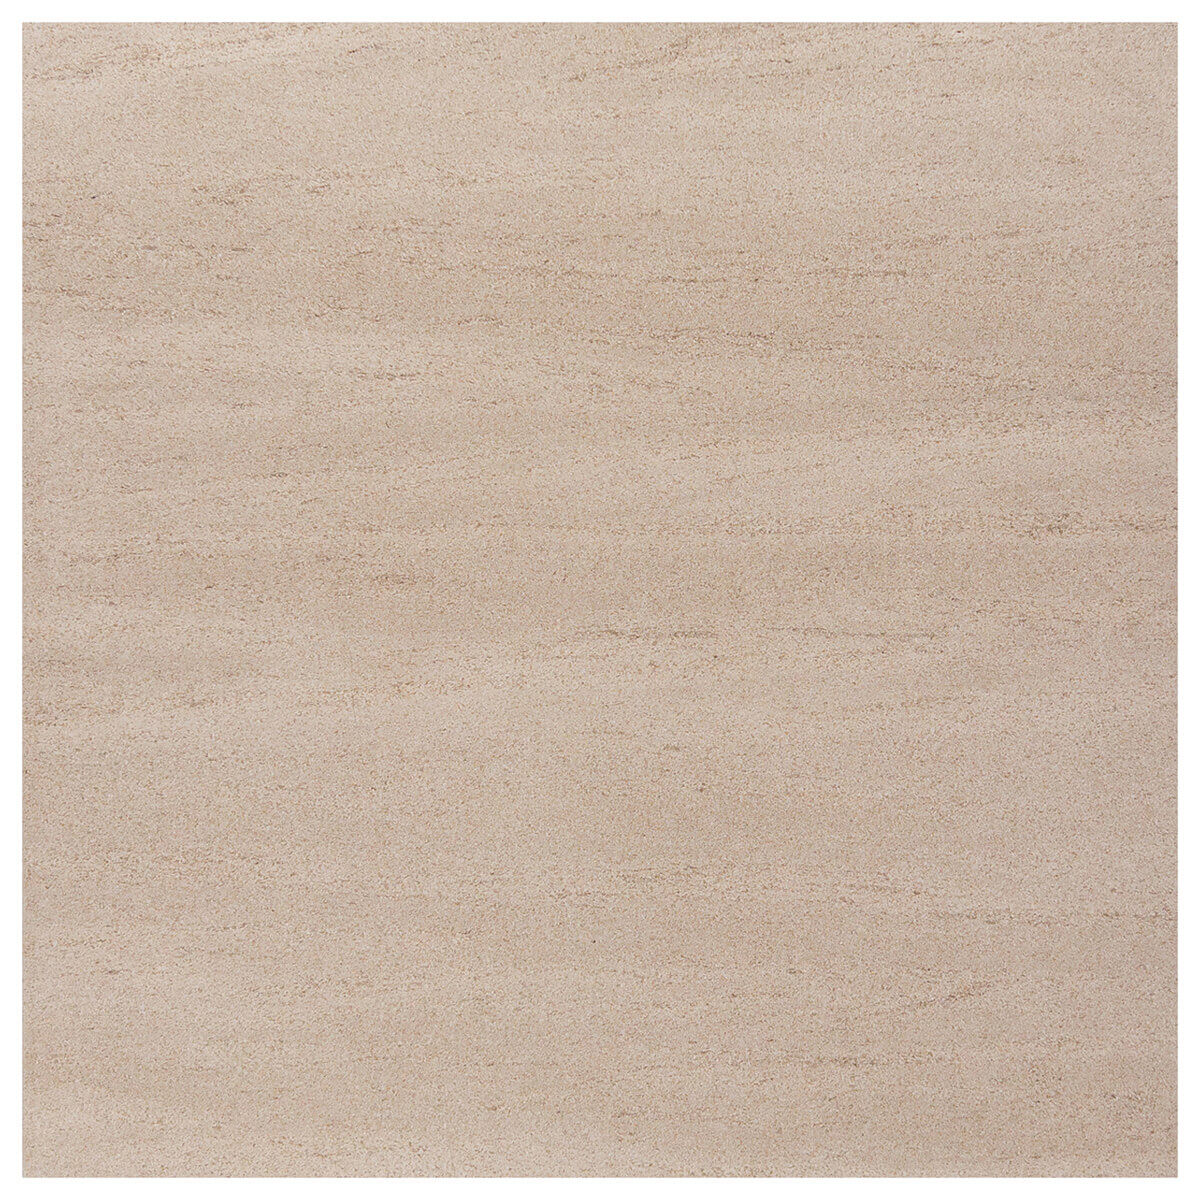 haussmann moca creme limestone square natural stone field tile 12x12 honed